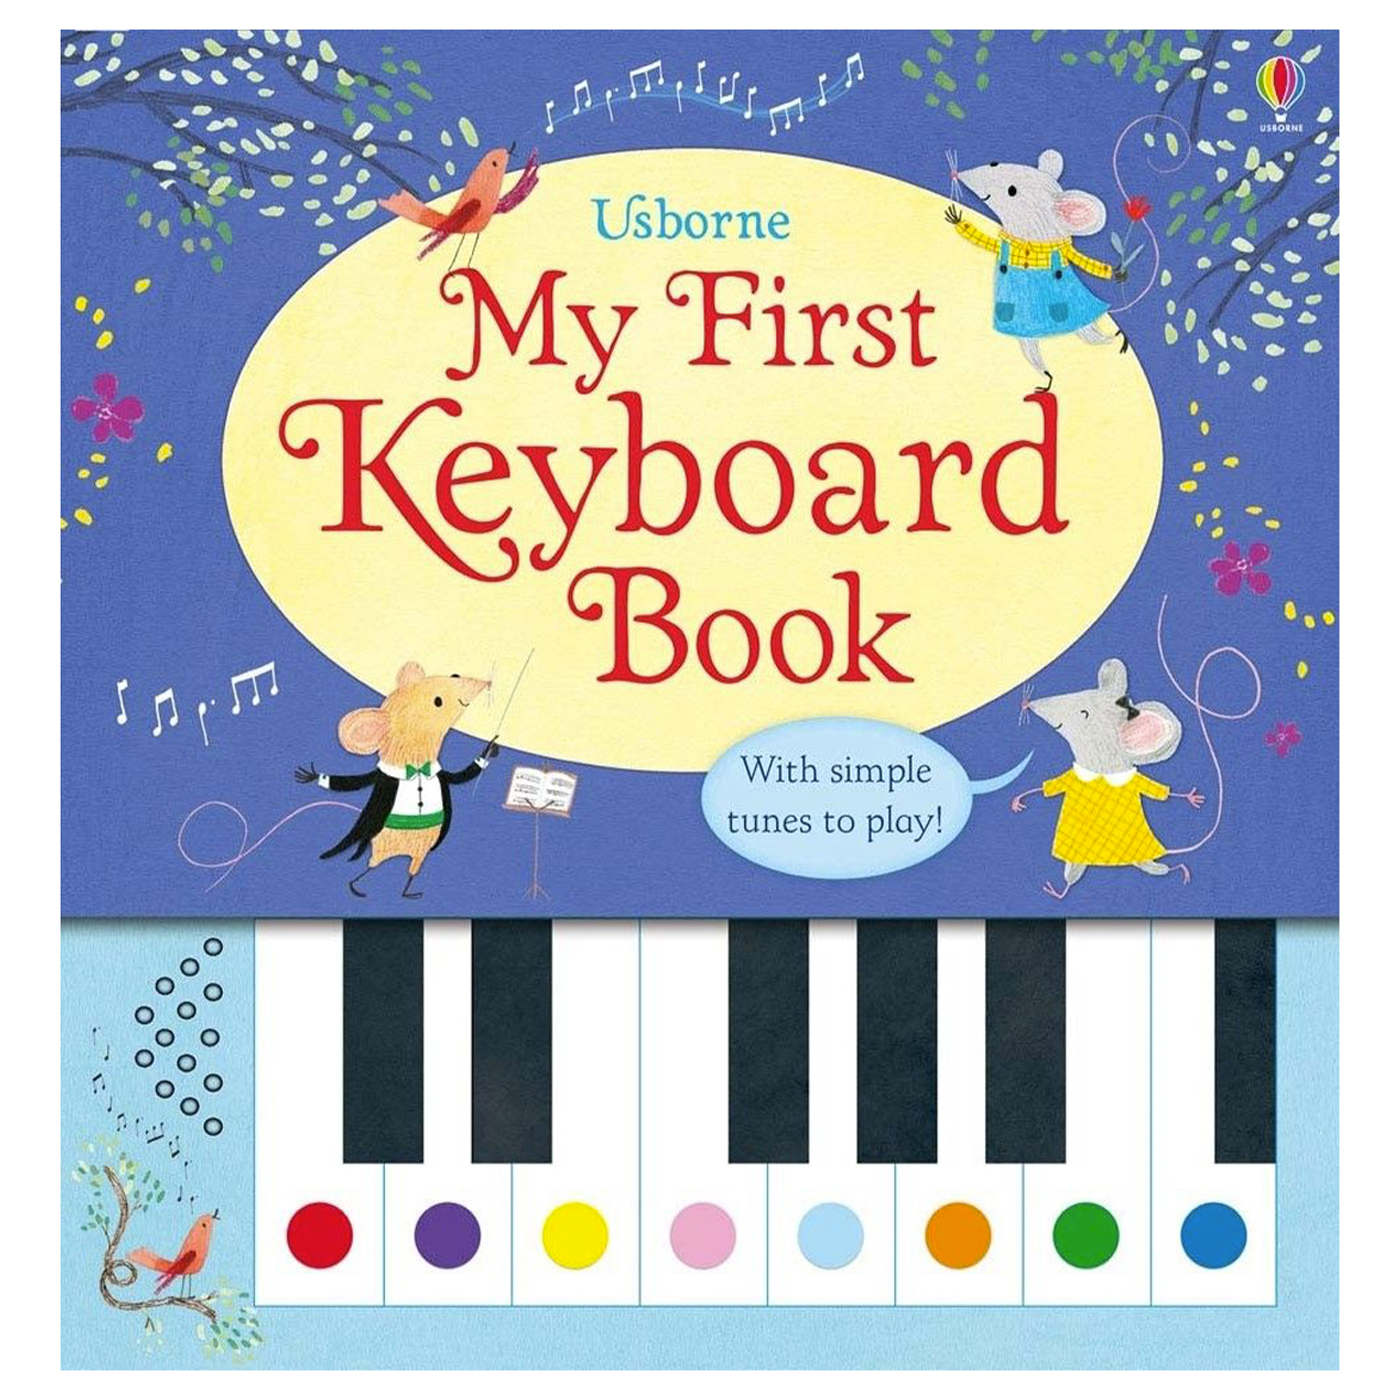  My First Keyboard Book